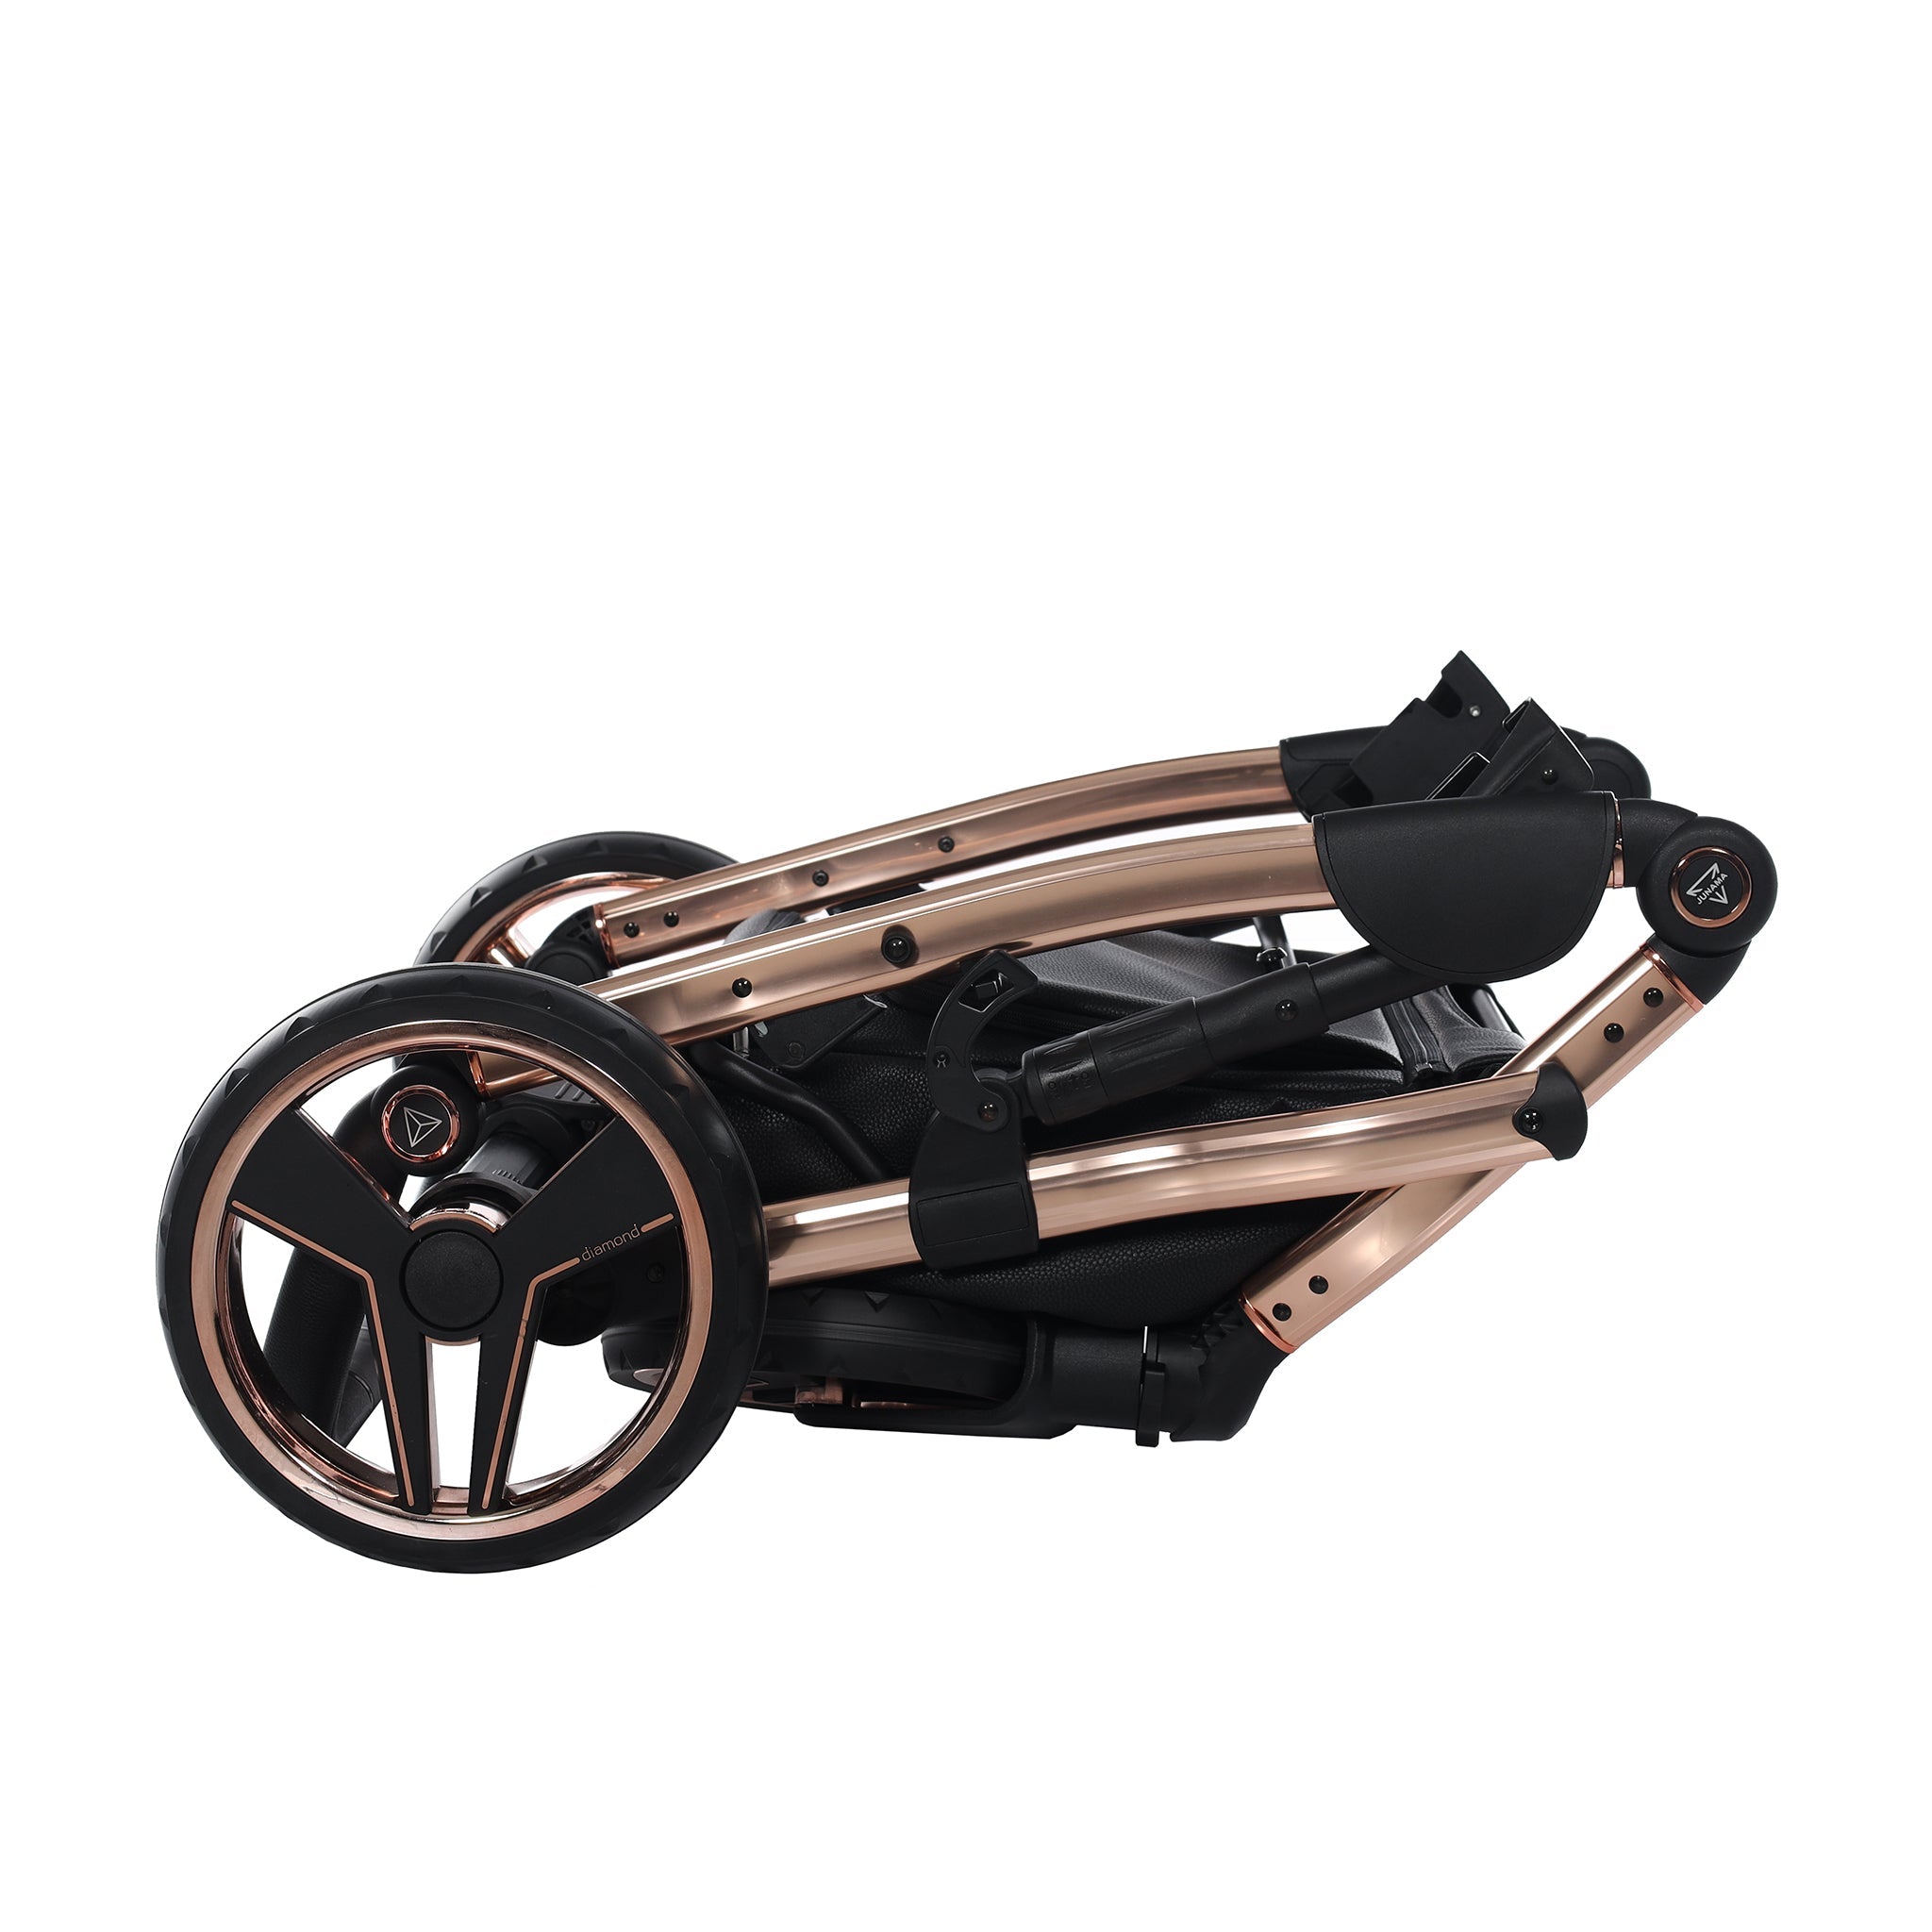 Junama Handcraft, baby prams or stroller 2 in 1 - Black and copper, number: JUNHC06